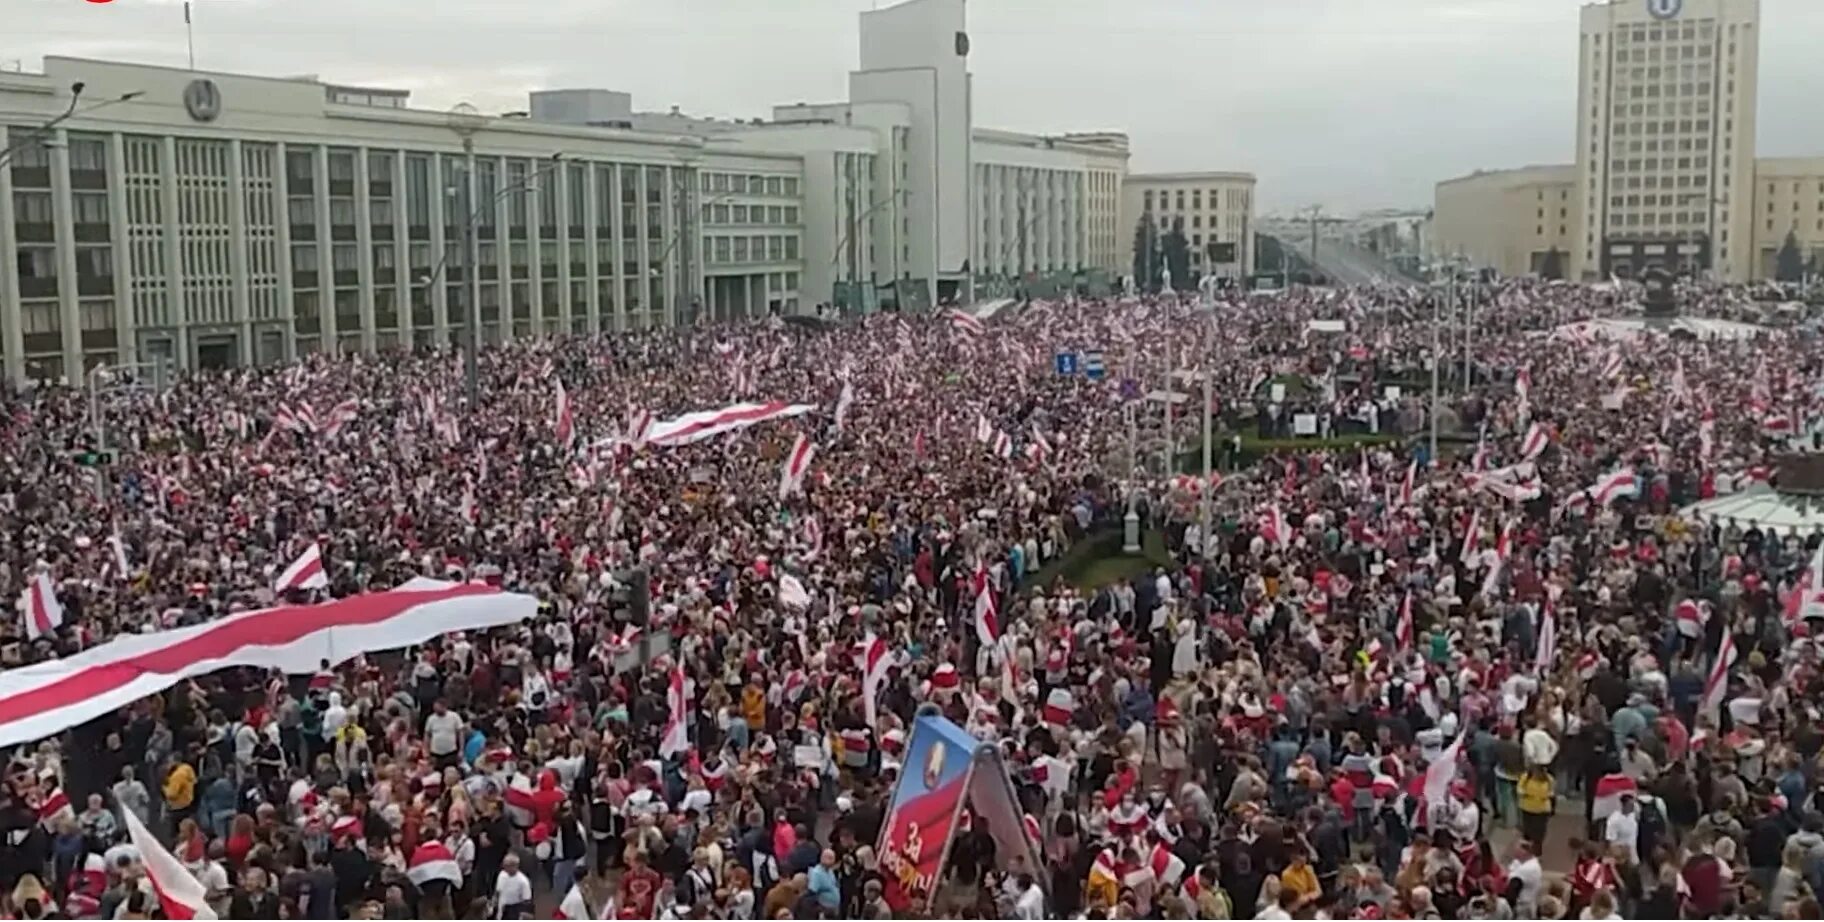 1 августа 2020 г. Минск площадь независимости митинг. Митинг в Минске 2020. Митинги в Беларуси 2020 оппозиция.